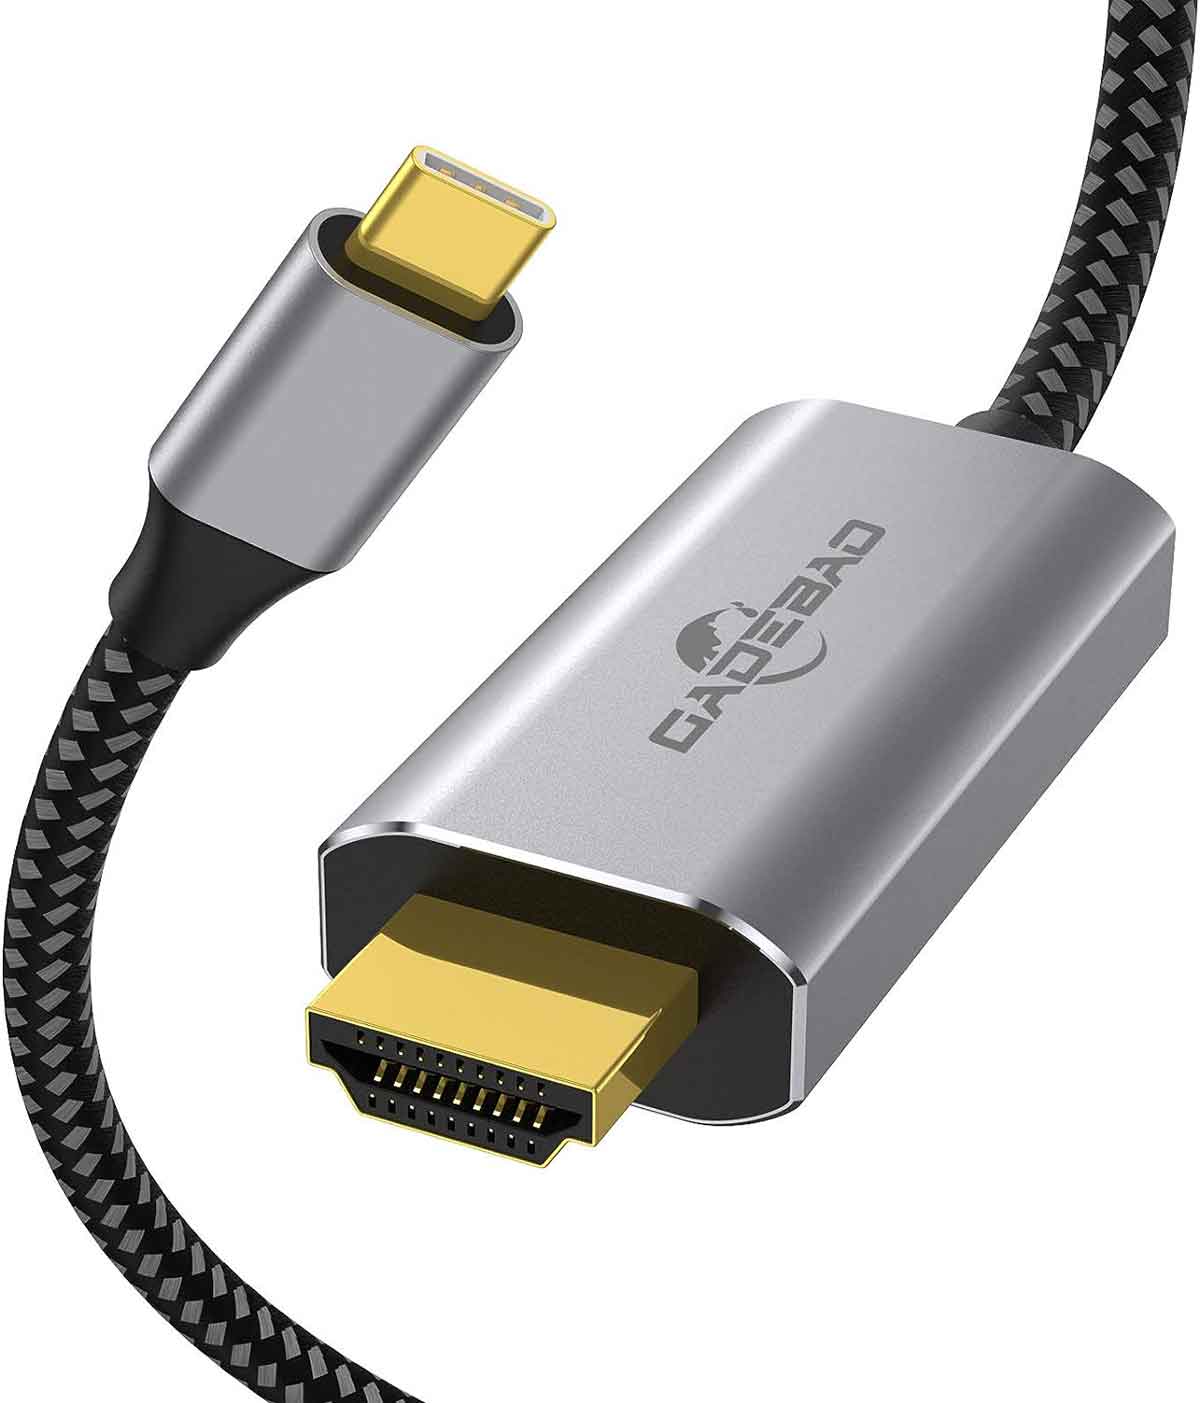 「USB C HDMI 変換 ケーブル」